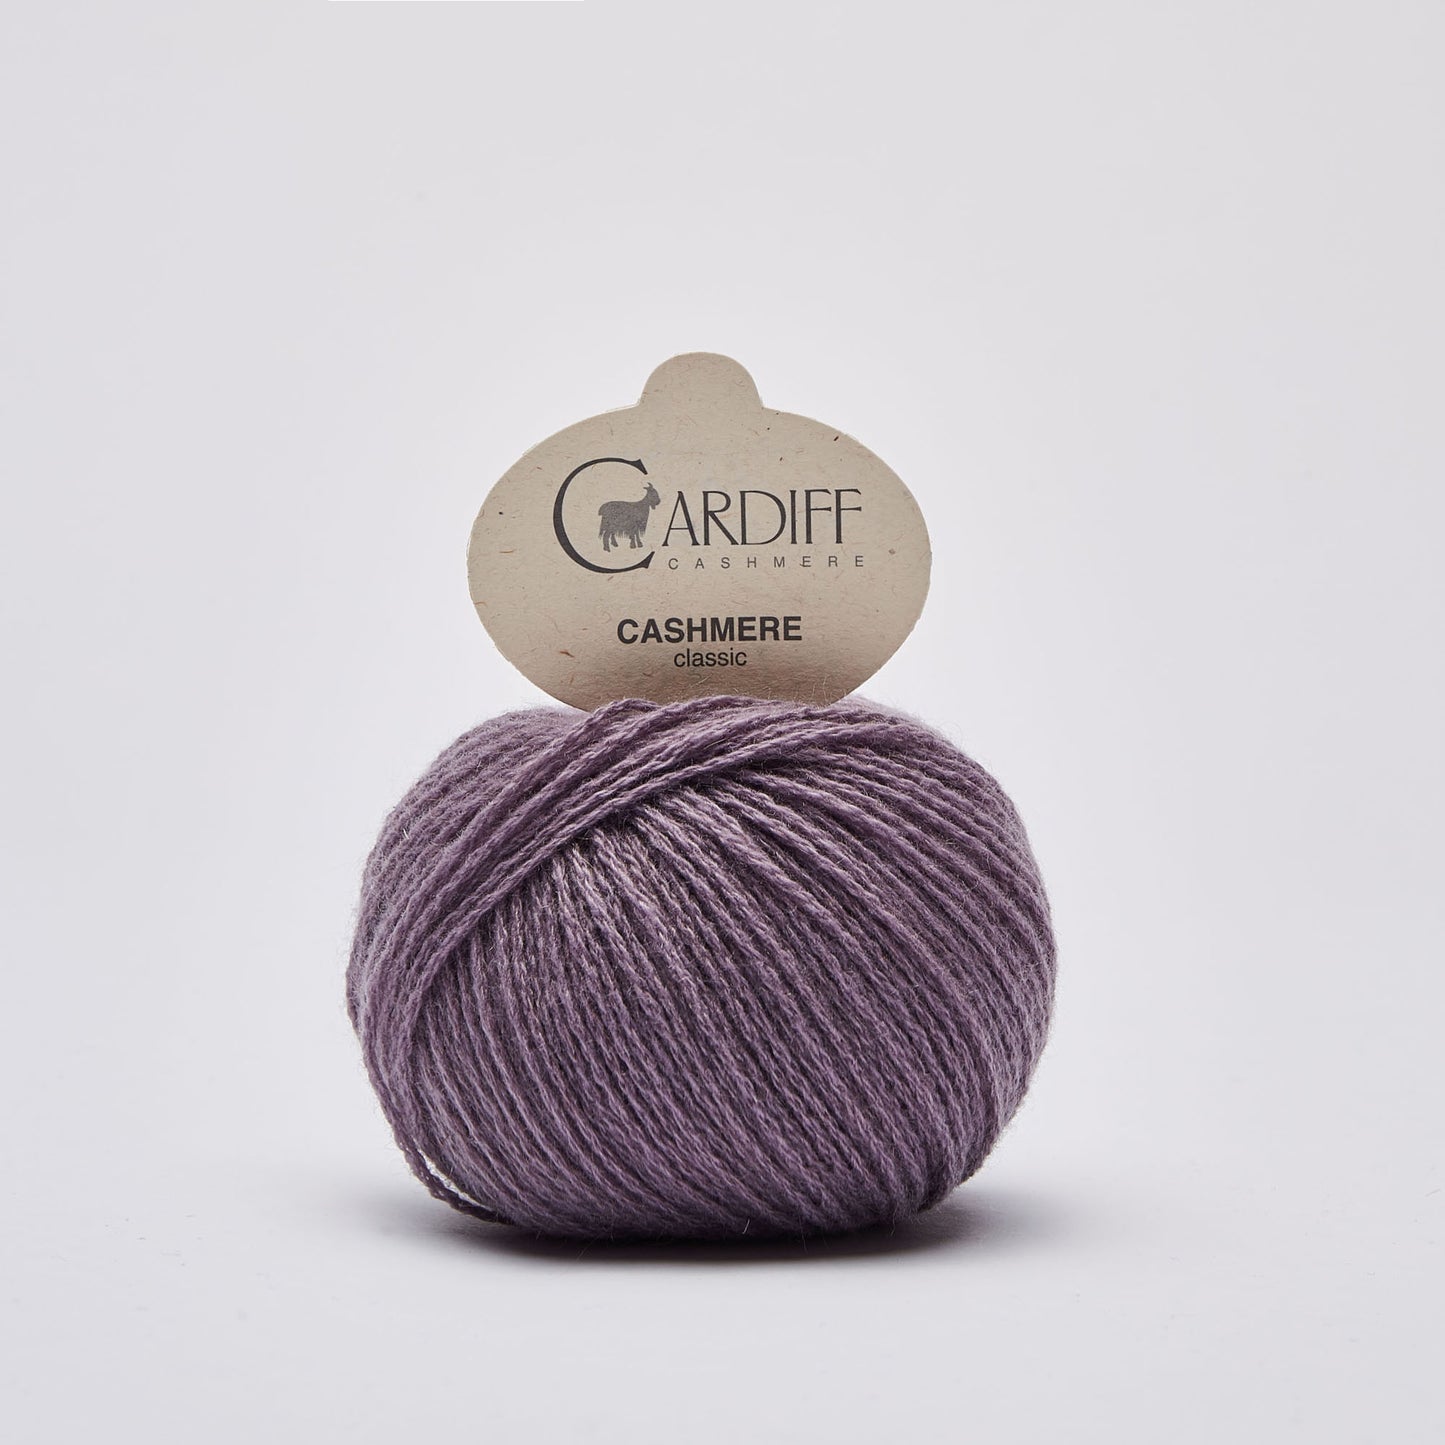 Cardiff CLASSIC gentle yarn, 657, GOSPEL, comp: 100% Cashmere